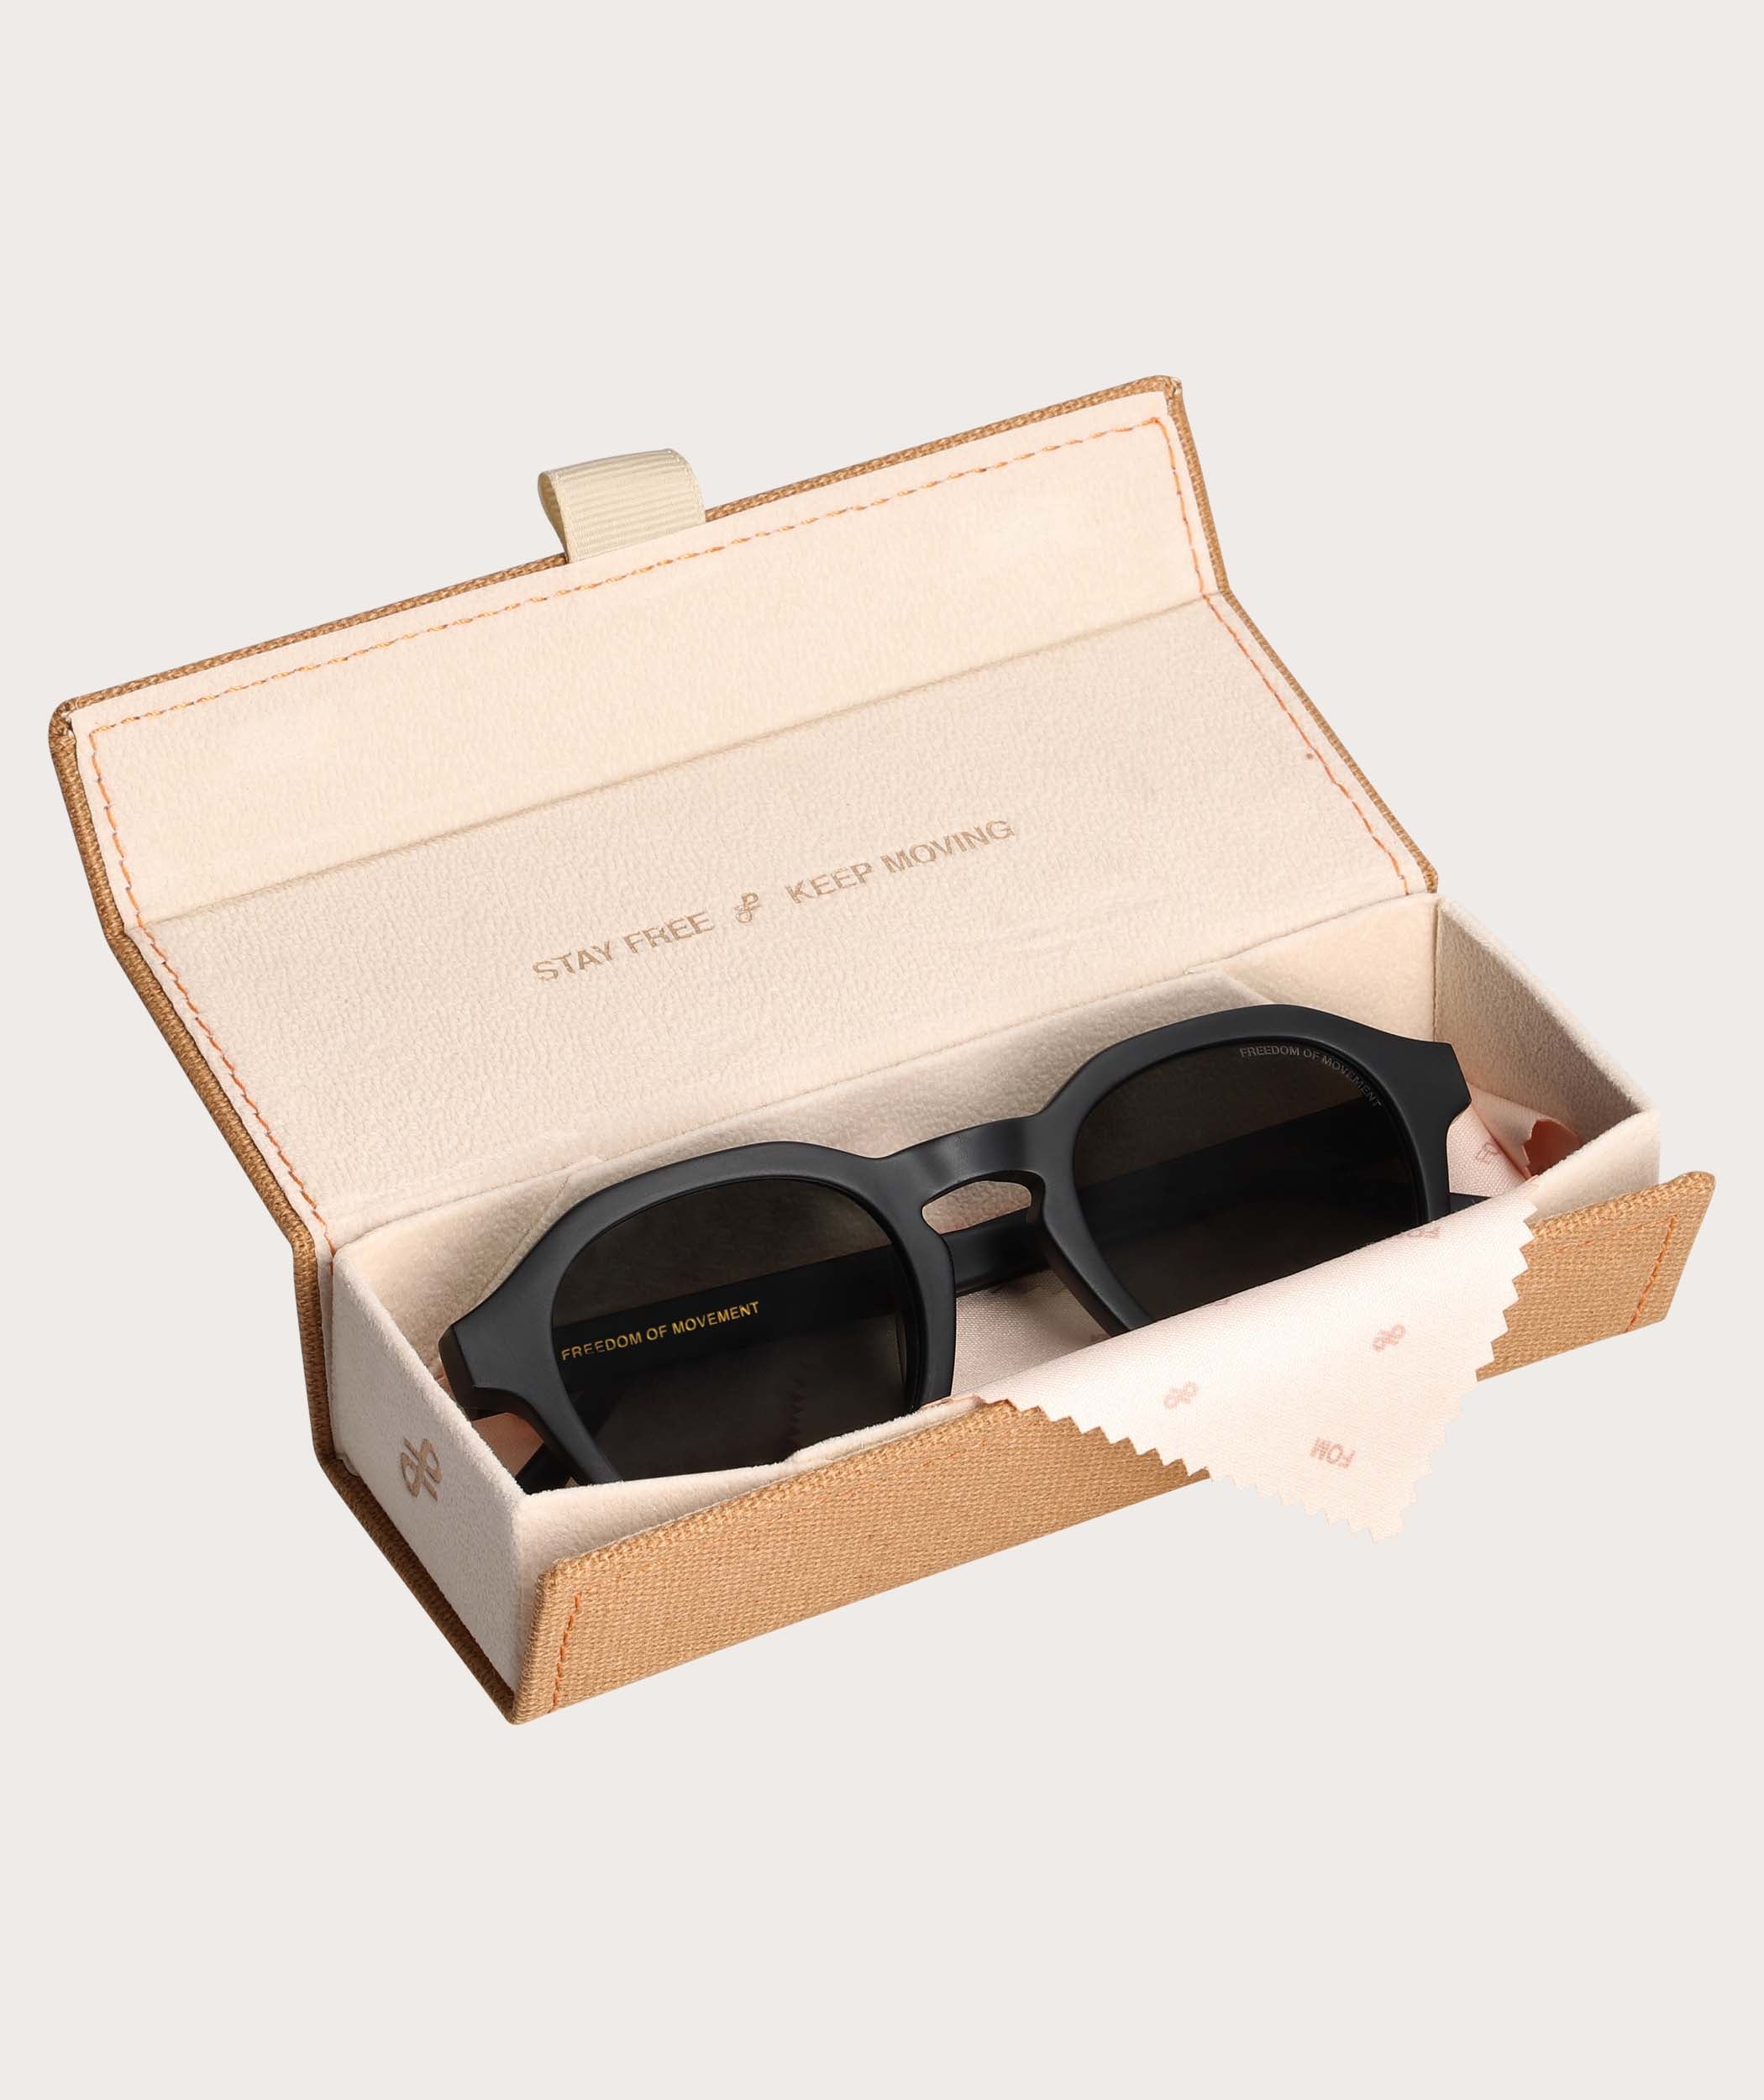 Royale 1080p Ultra HD Video camera Sunglasses | Govision USA